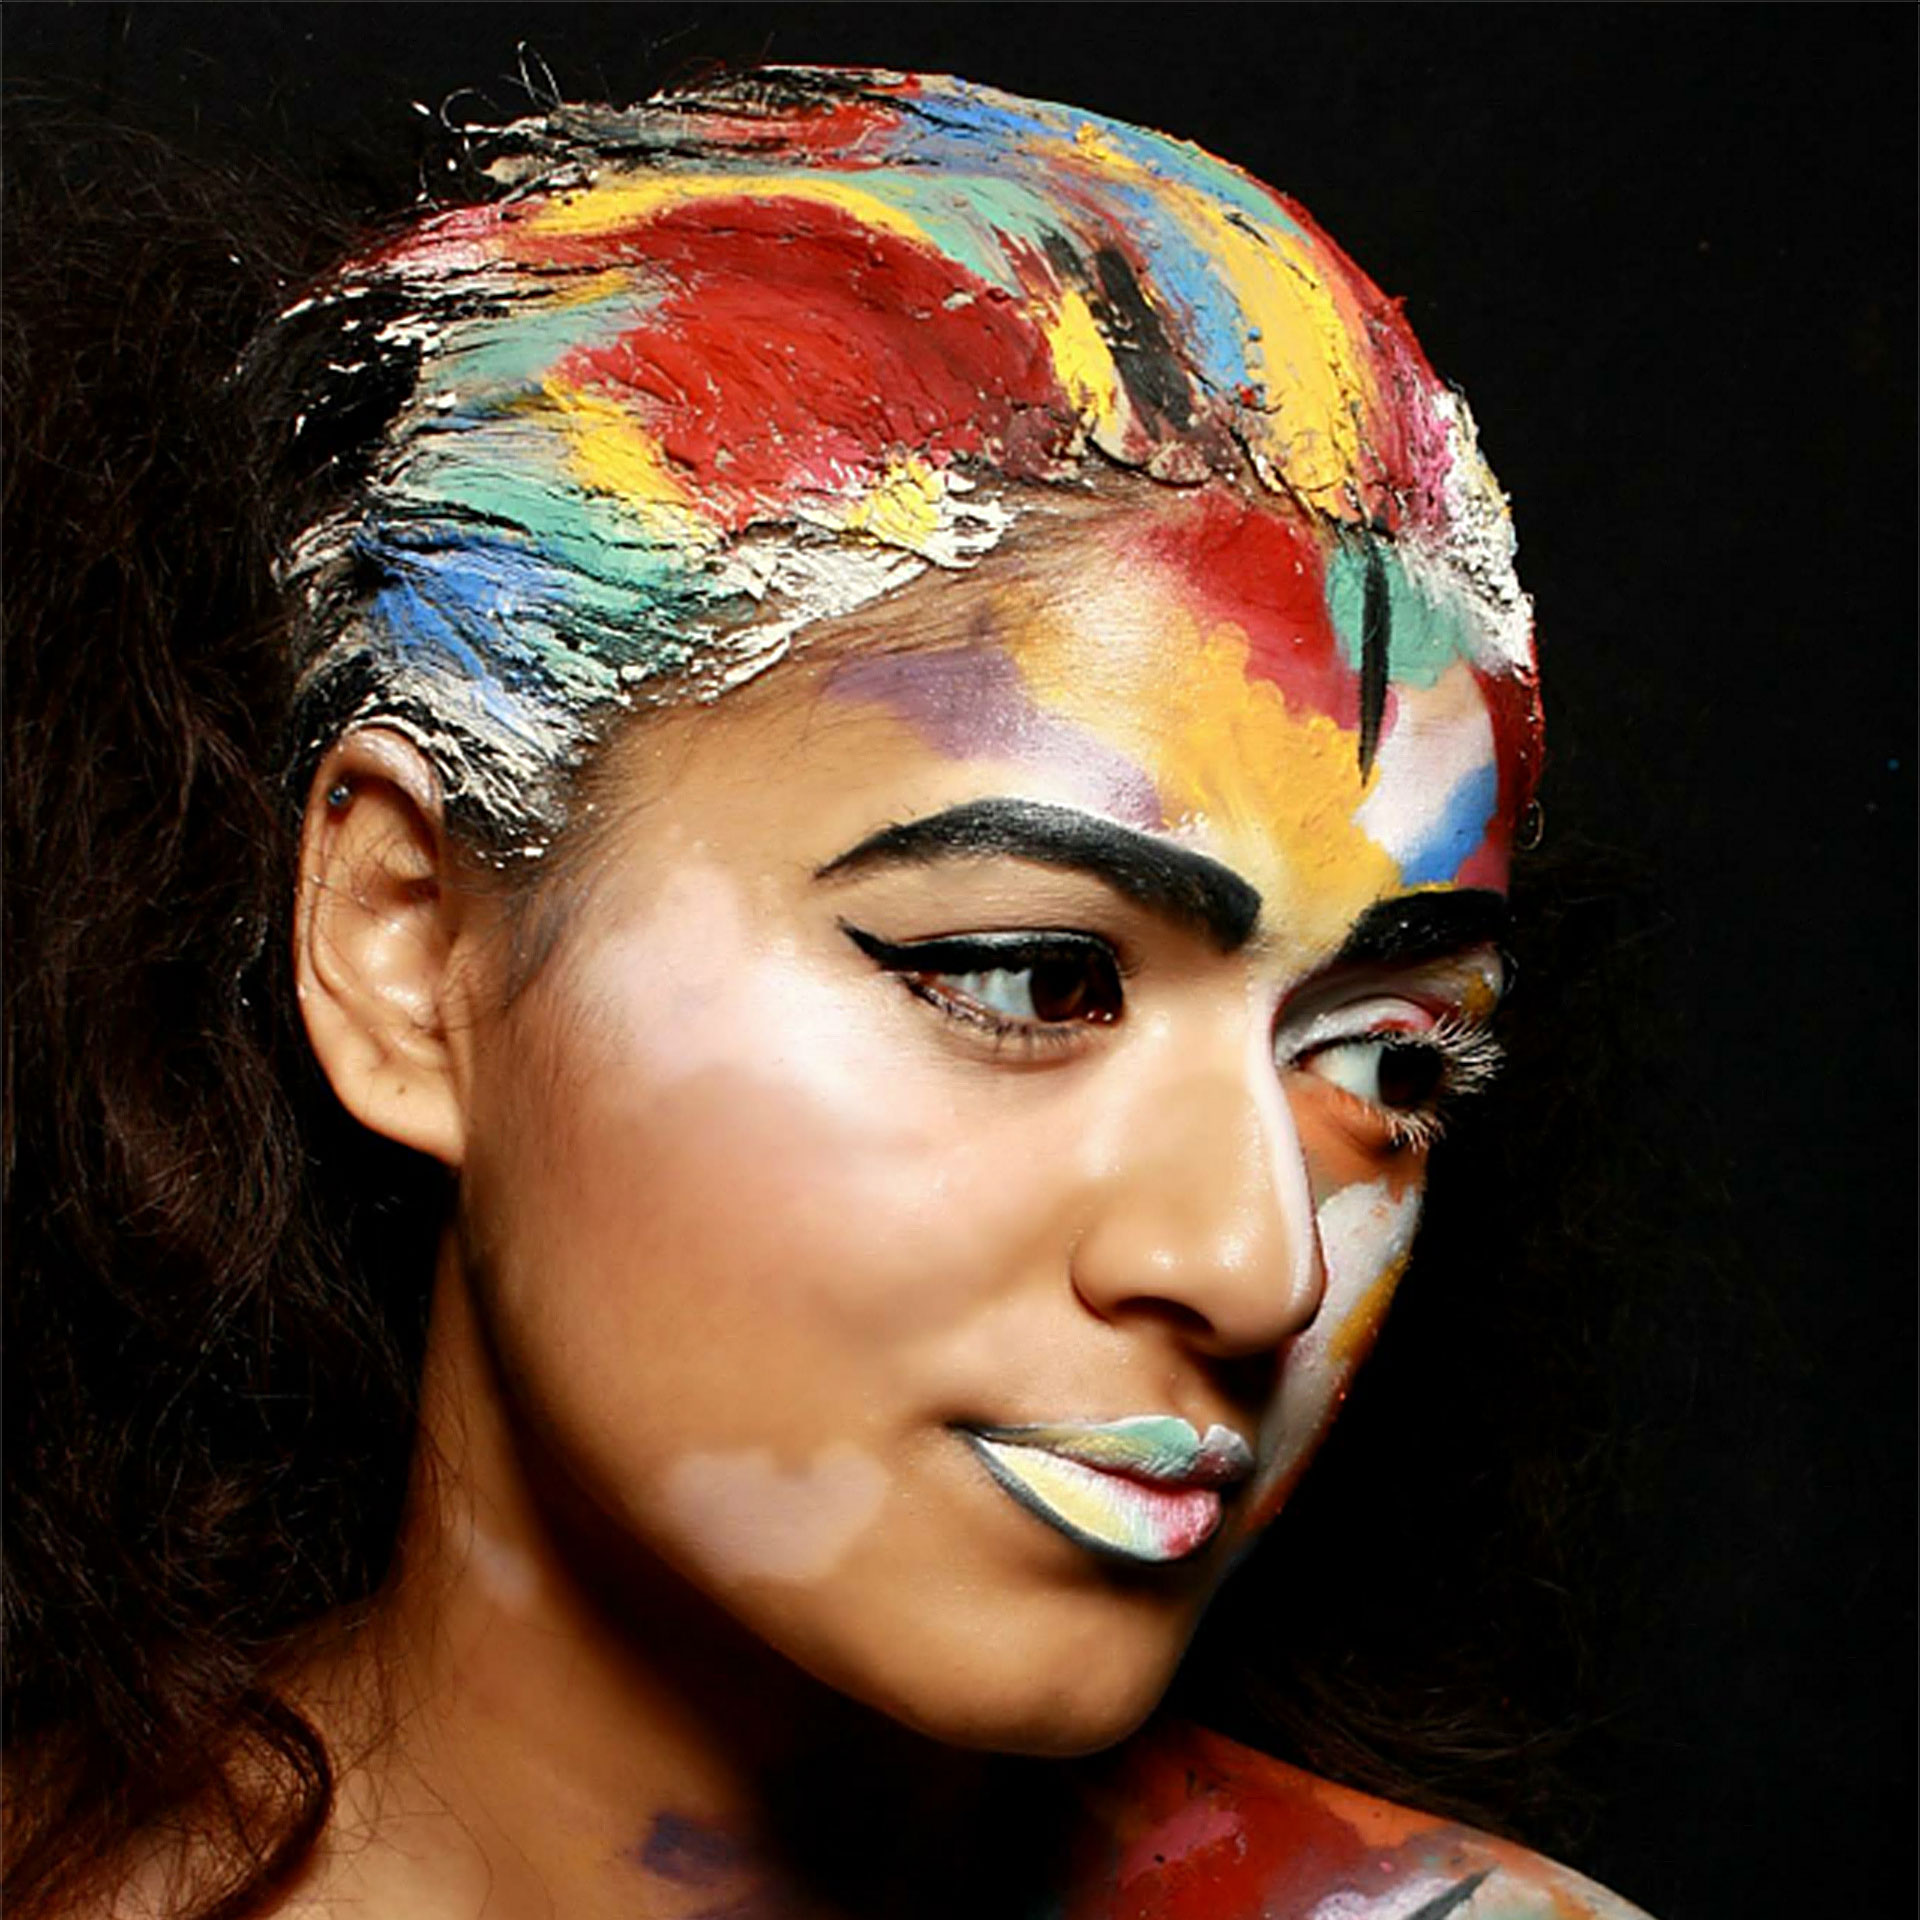 Zaina Ishaq models some of her final major project make-up